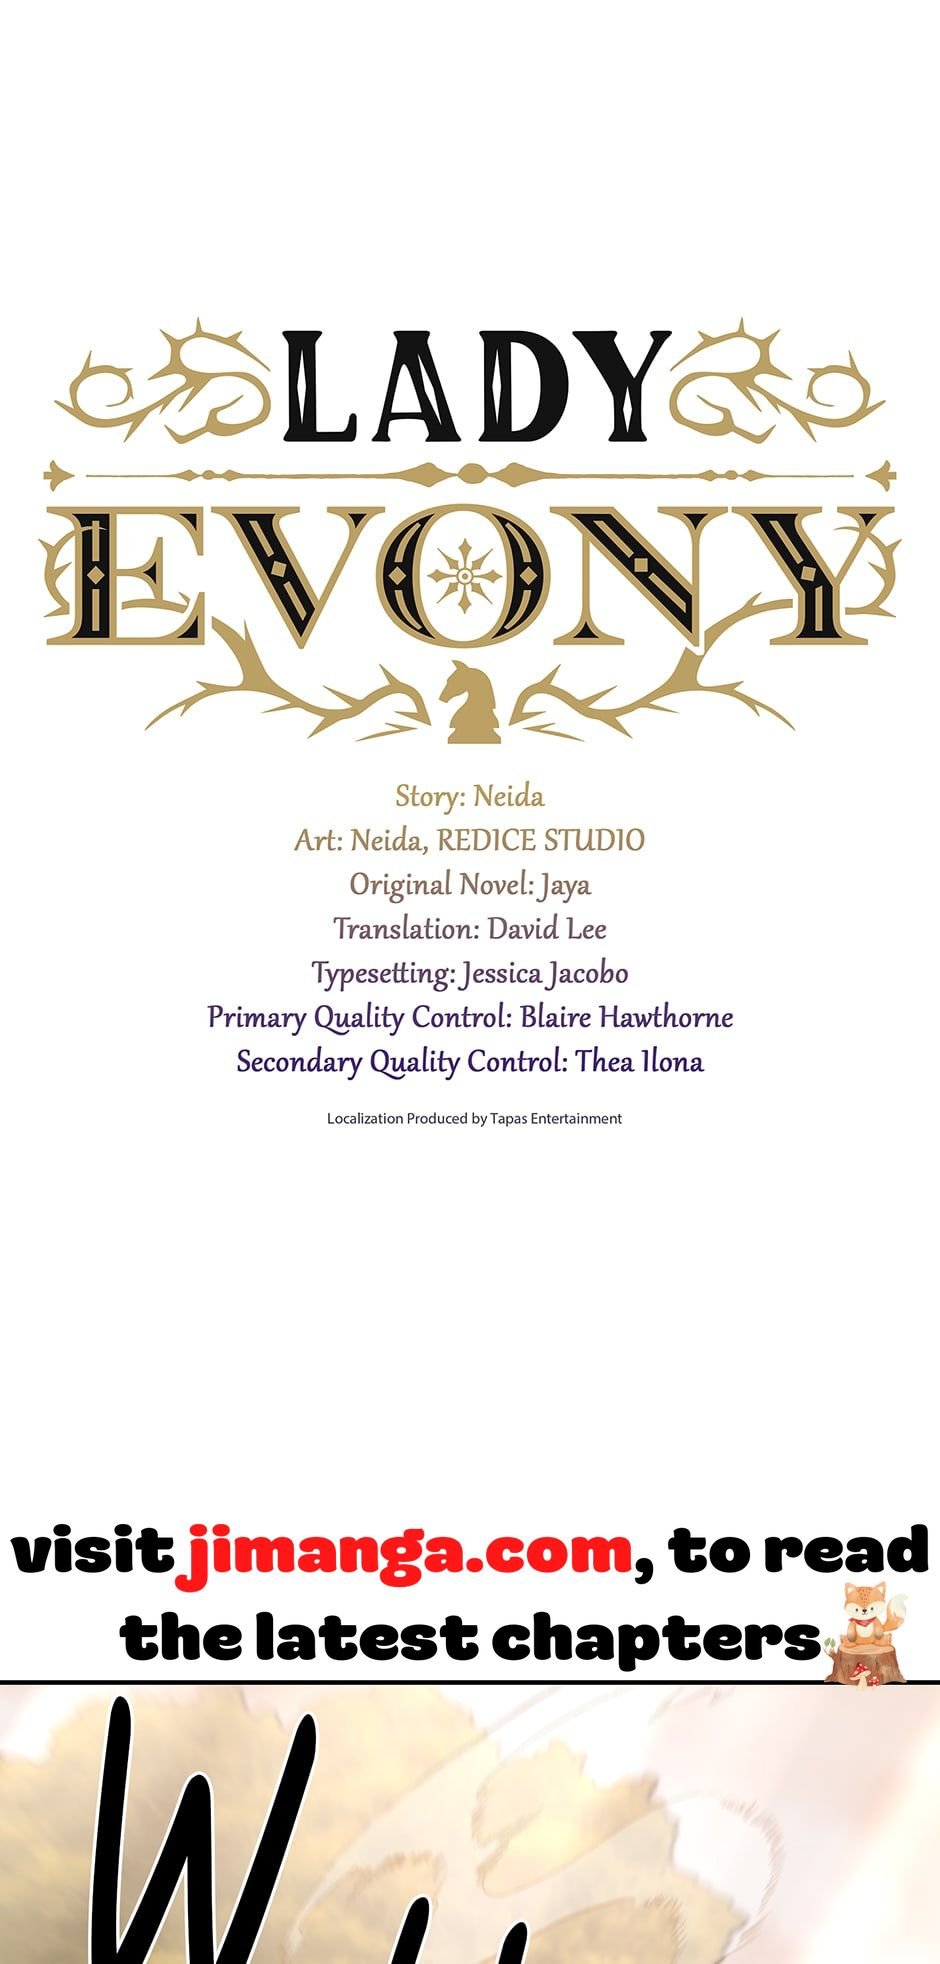 Ebony - Page 1